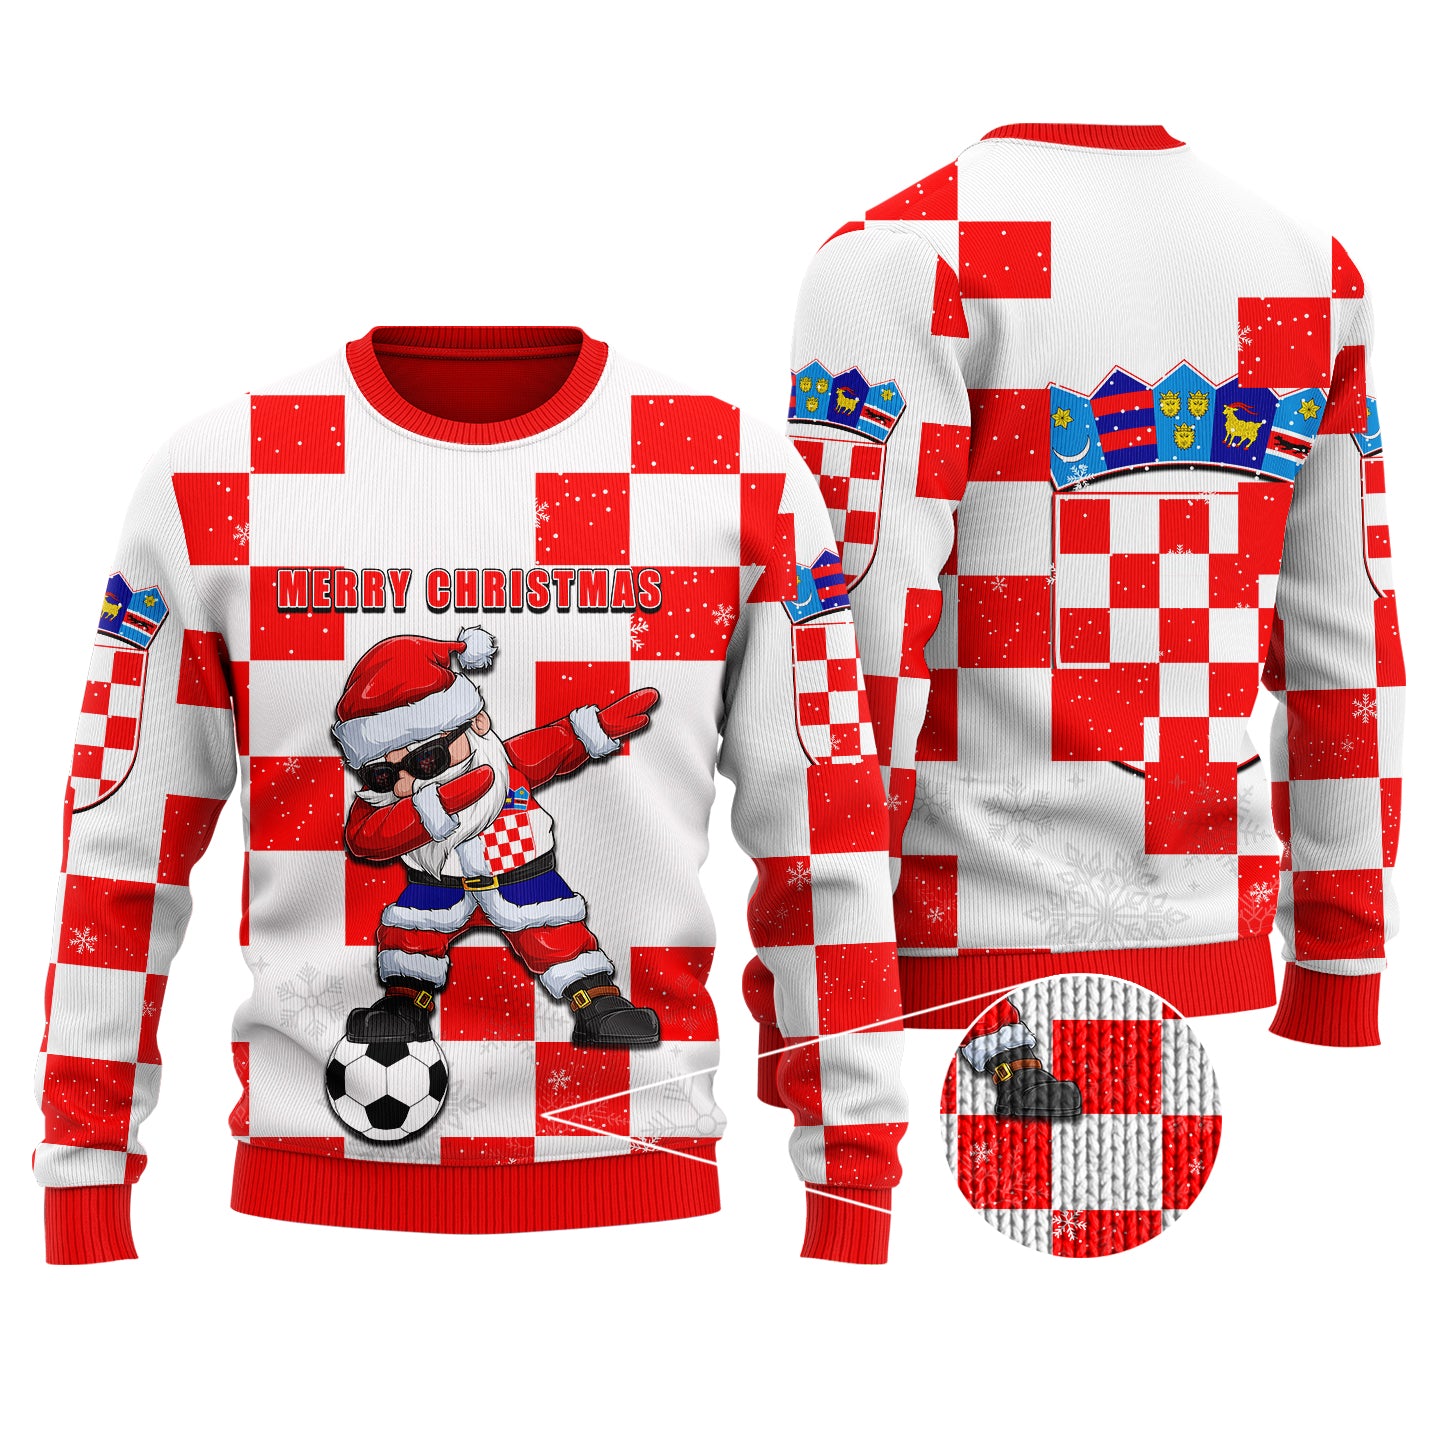 Croatia Christmas Santa Claus Dabbing Knitted Sweater Replica Football Jersey